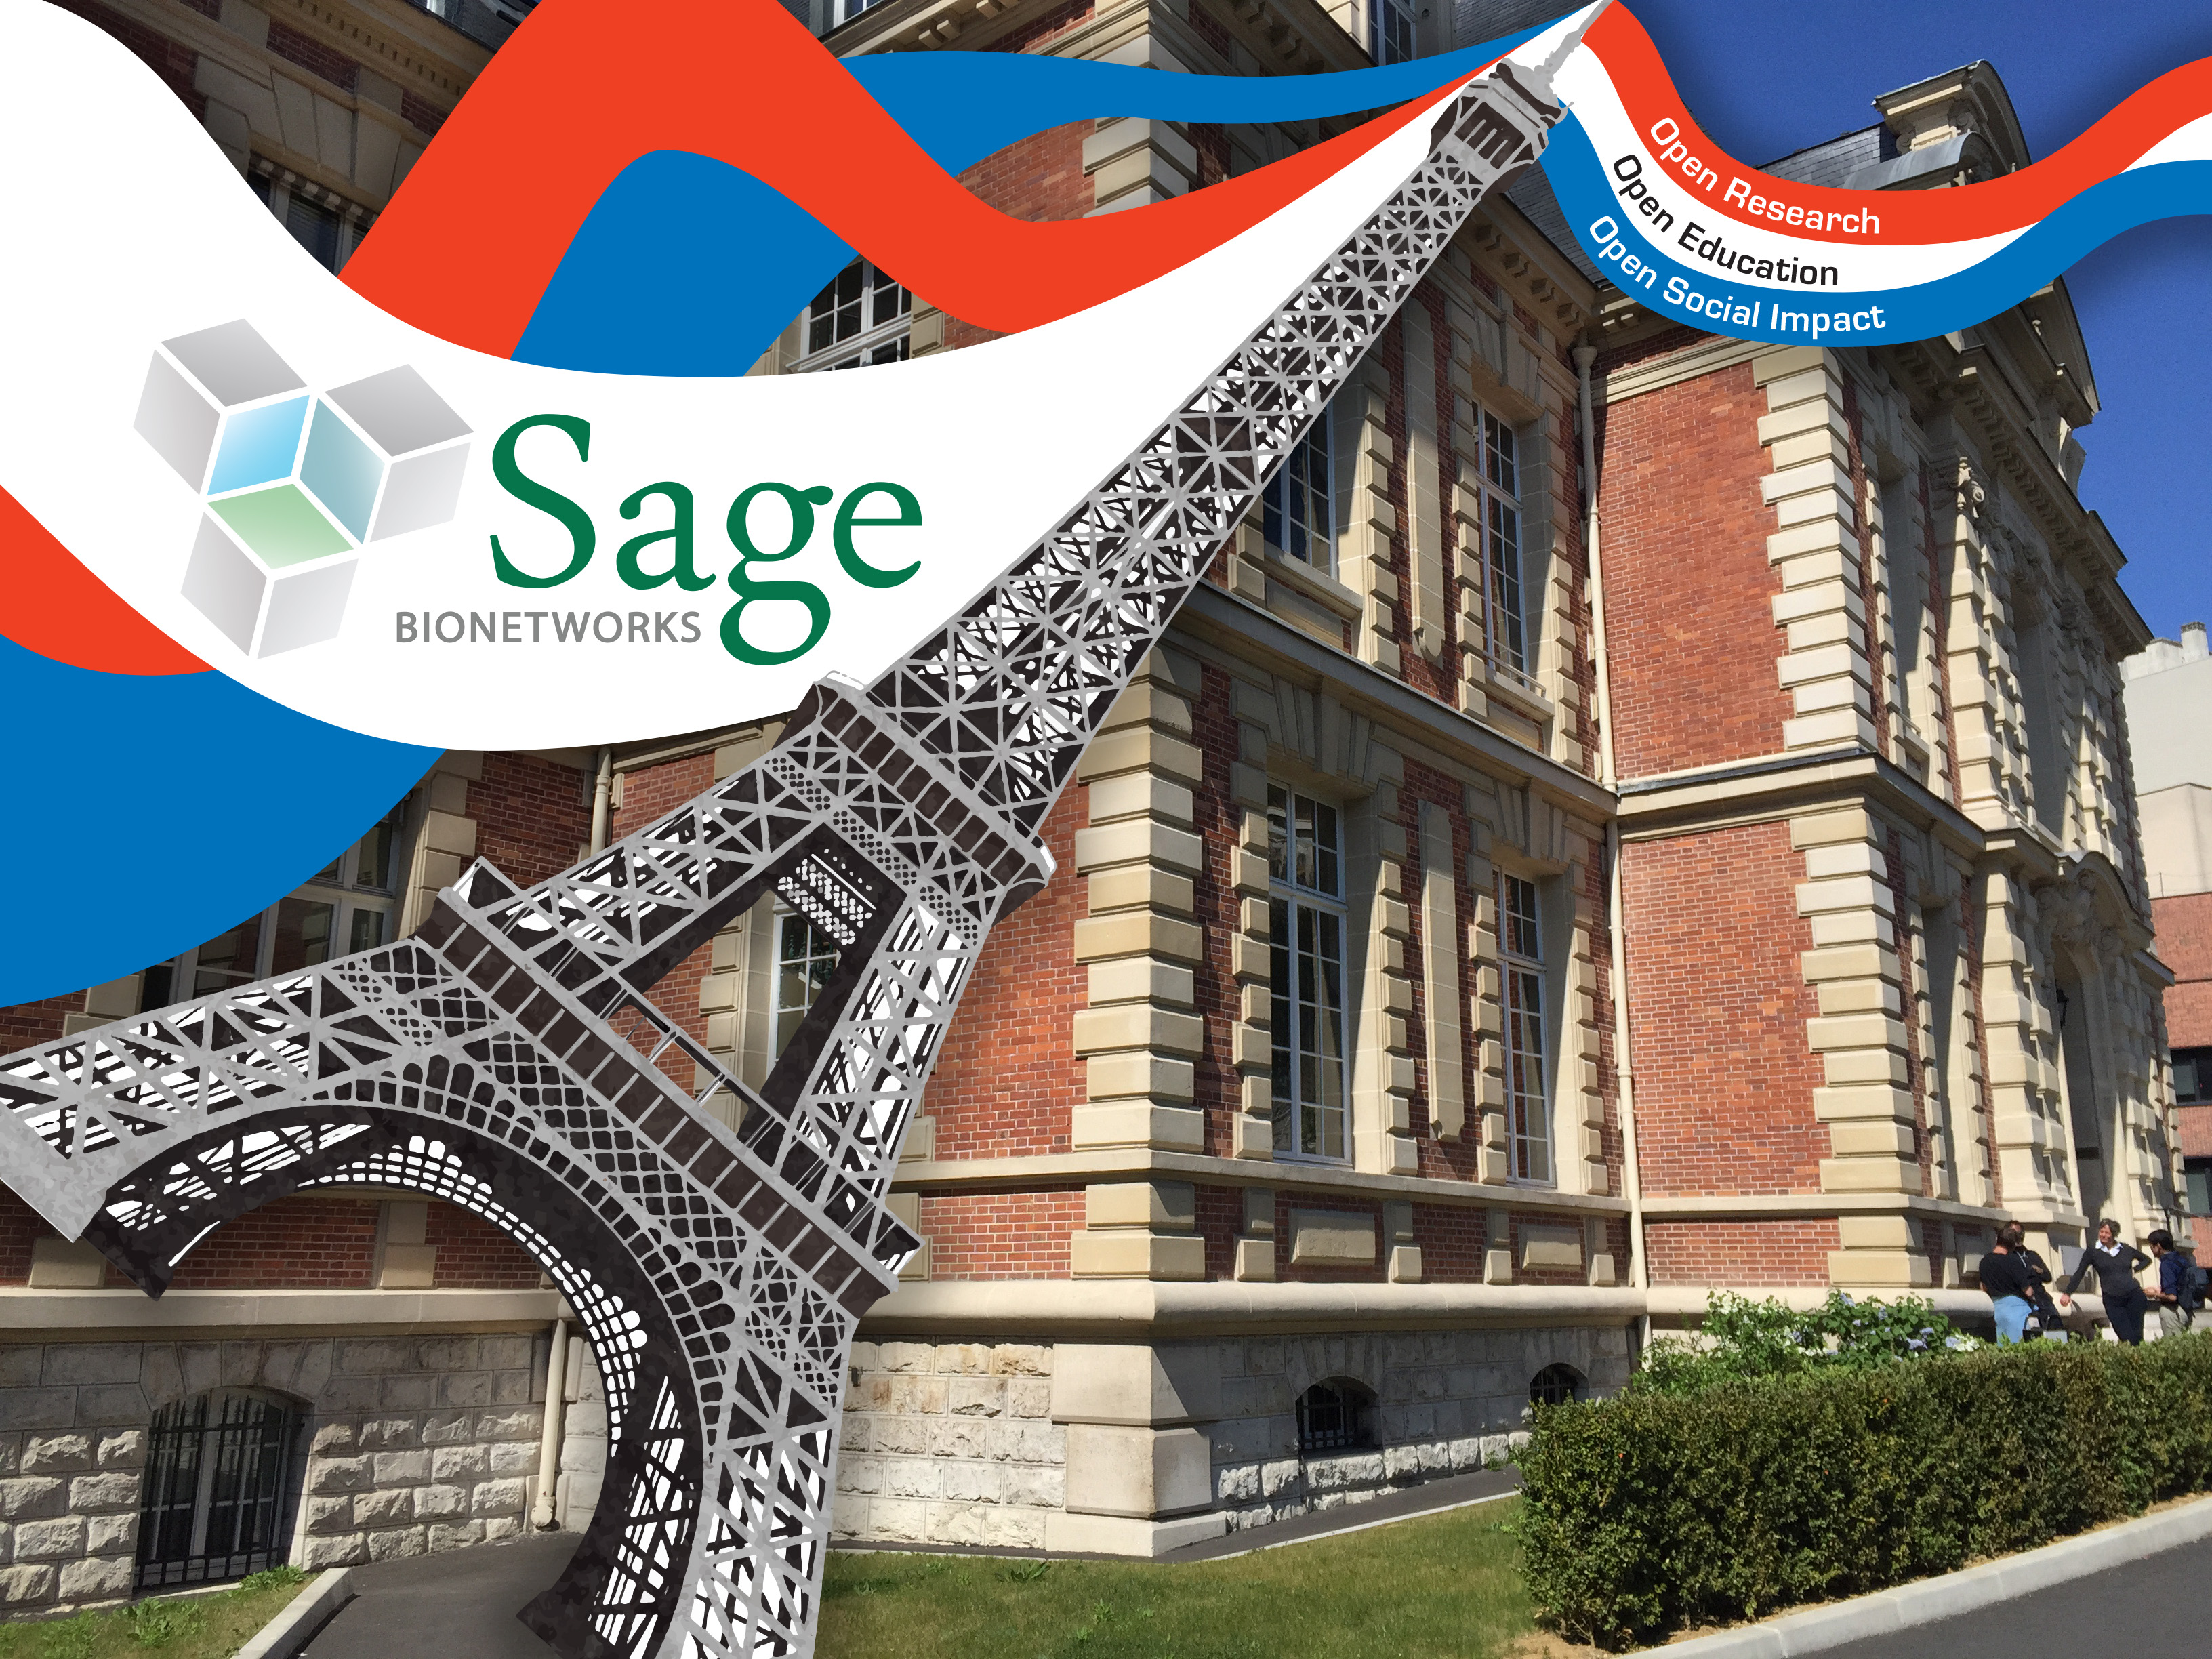 Institut Pasteur Sage Illustration